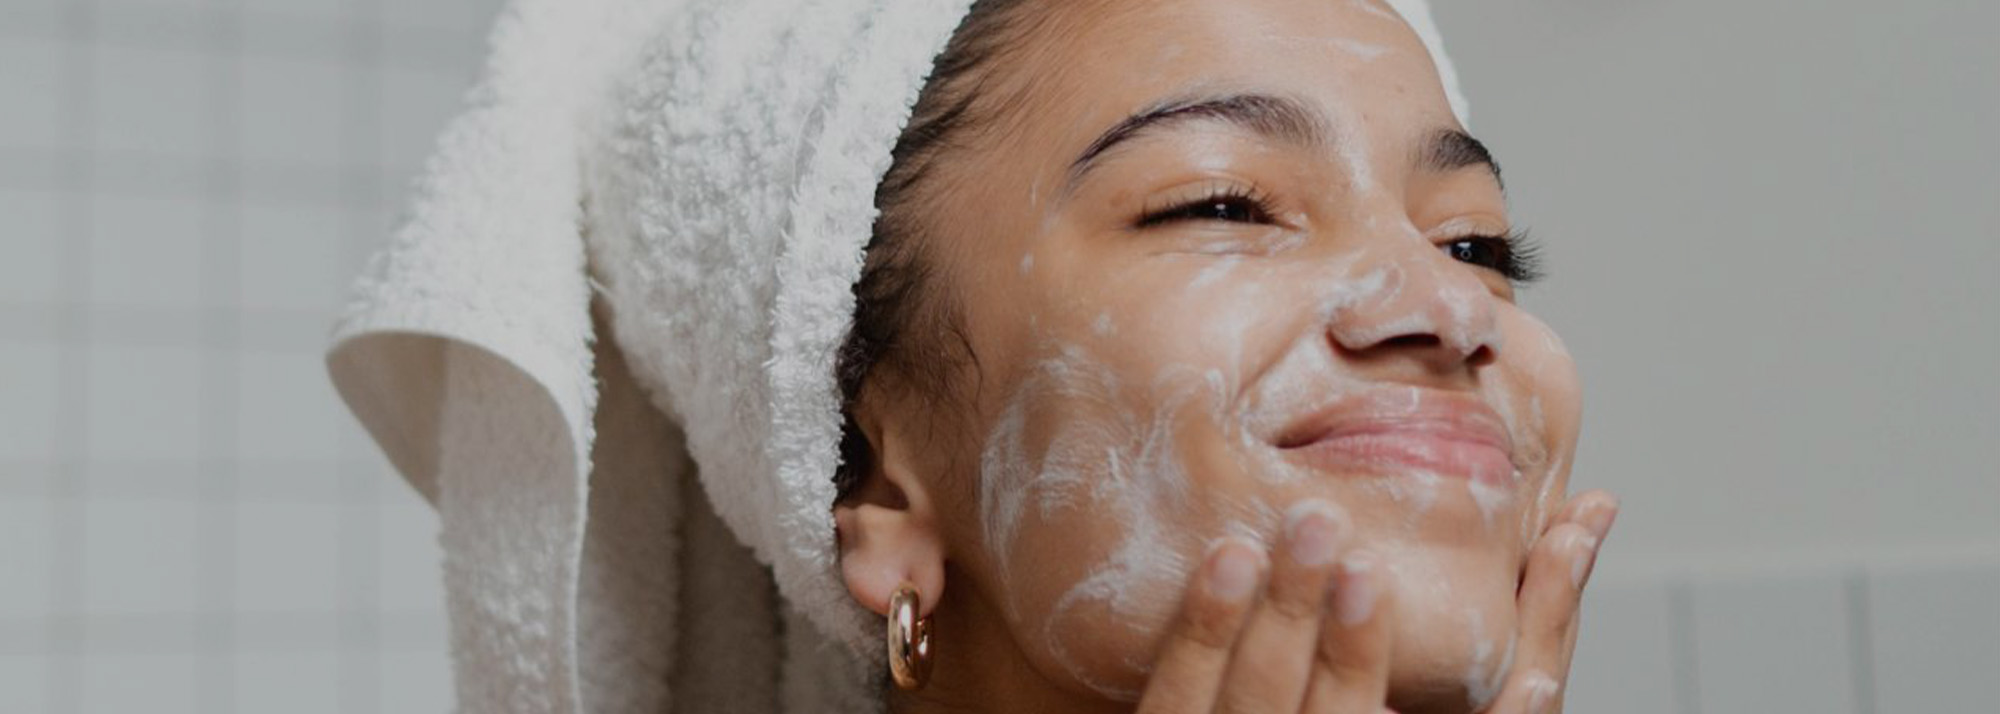 Exfoliating Skin Care - Skin Care 101 Blog